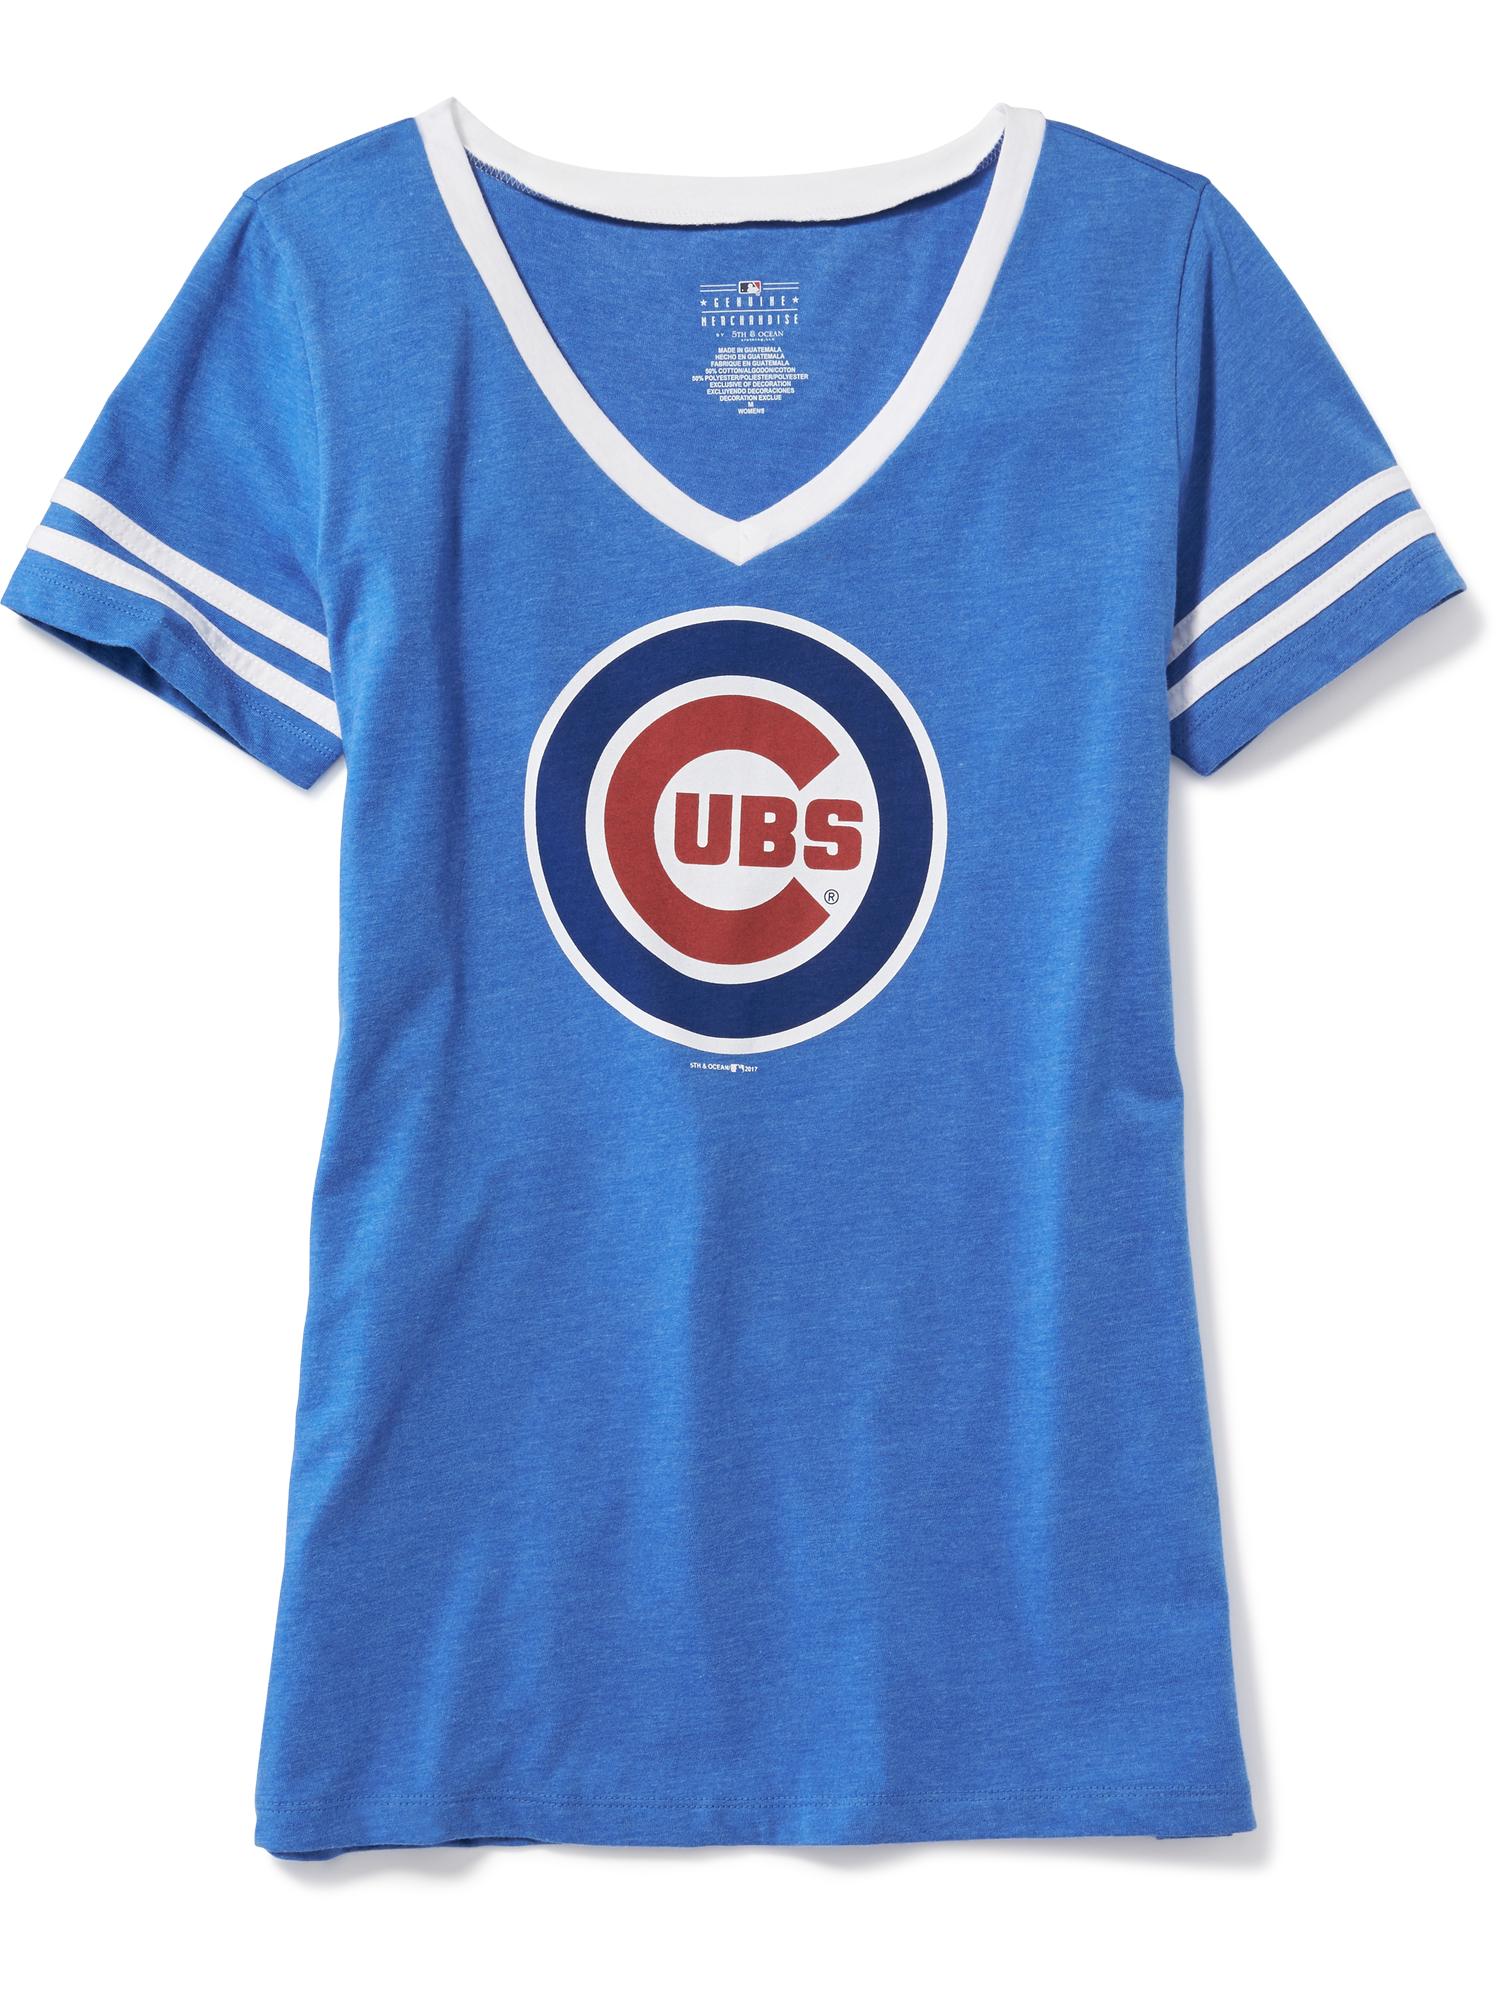 St. Louis Cardinals Shirt Womens Medium Blue Vneck Tshirt MLB